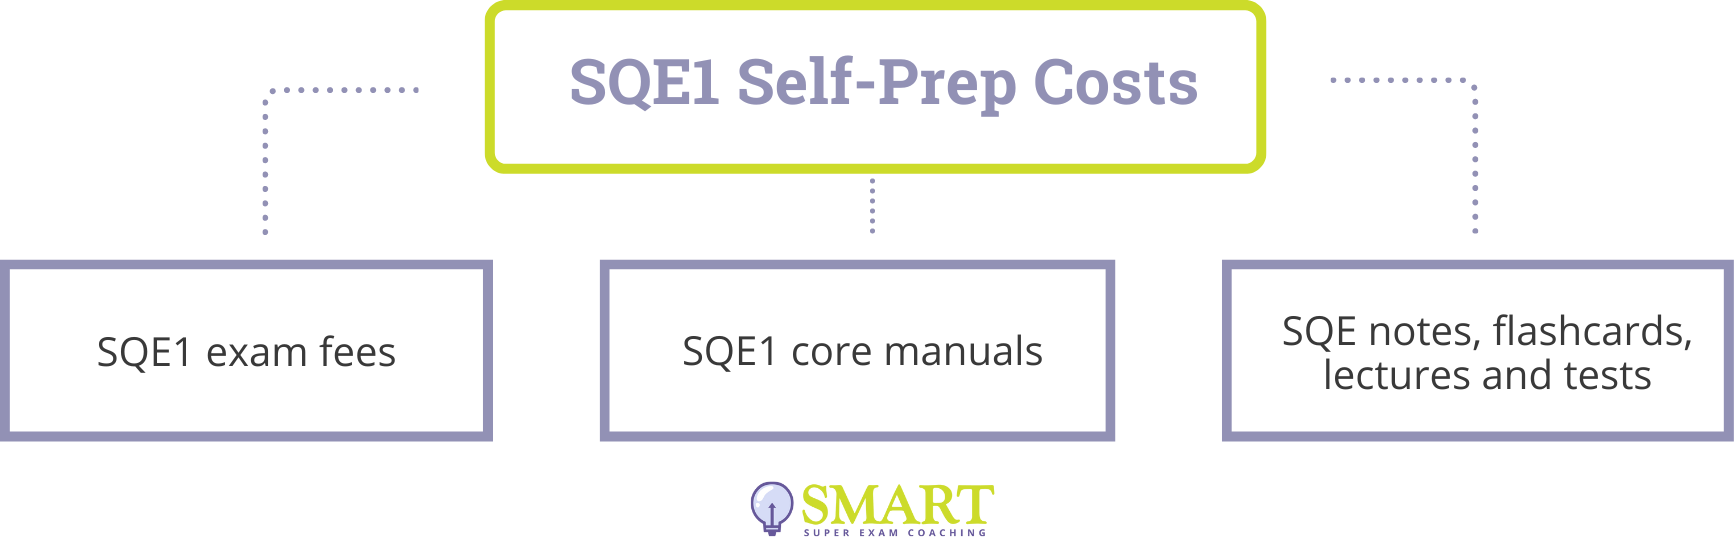 SQE1 Self-Preparation Costs